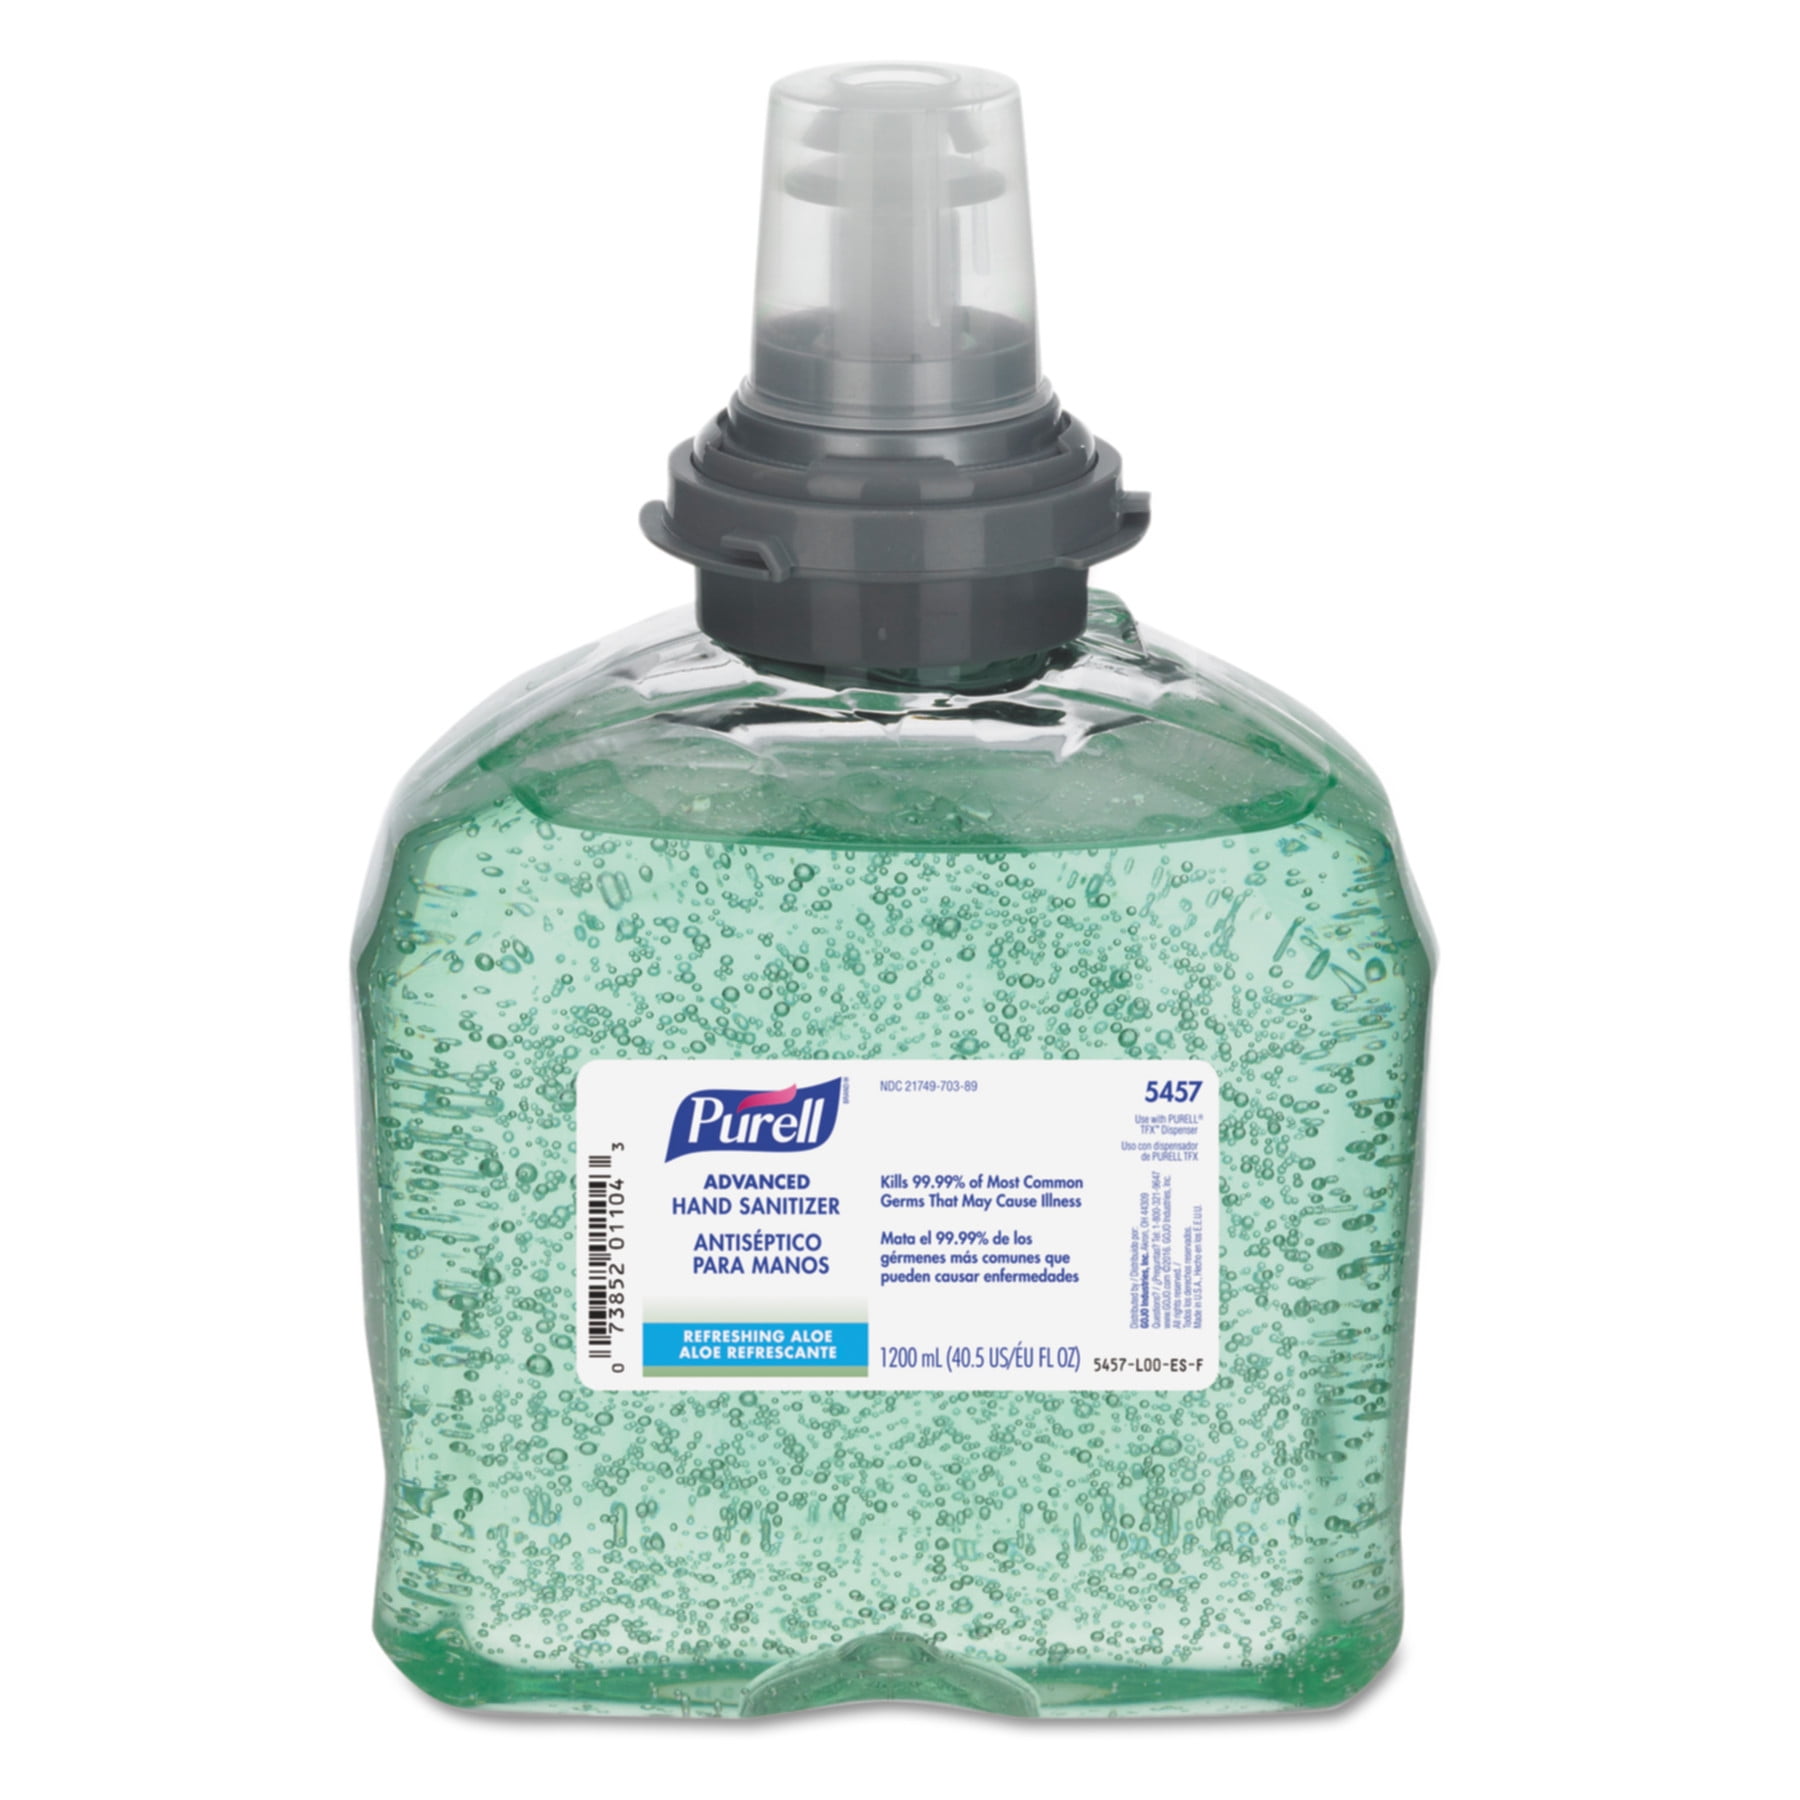 Aérosol anti-agression gel poivre 25 mL - A10 Equipment